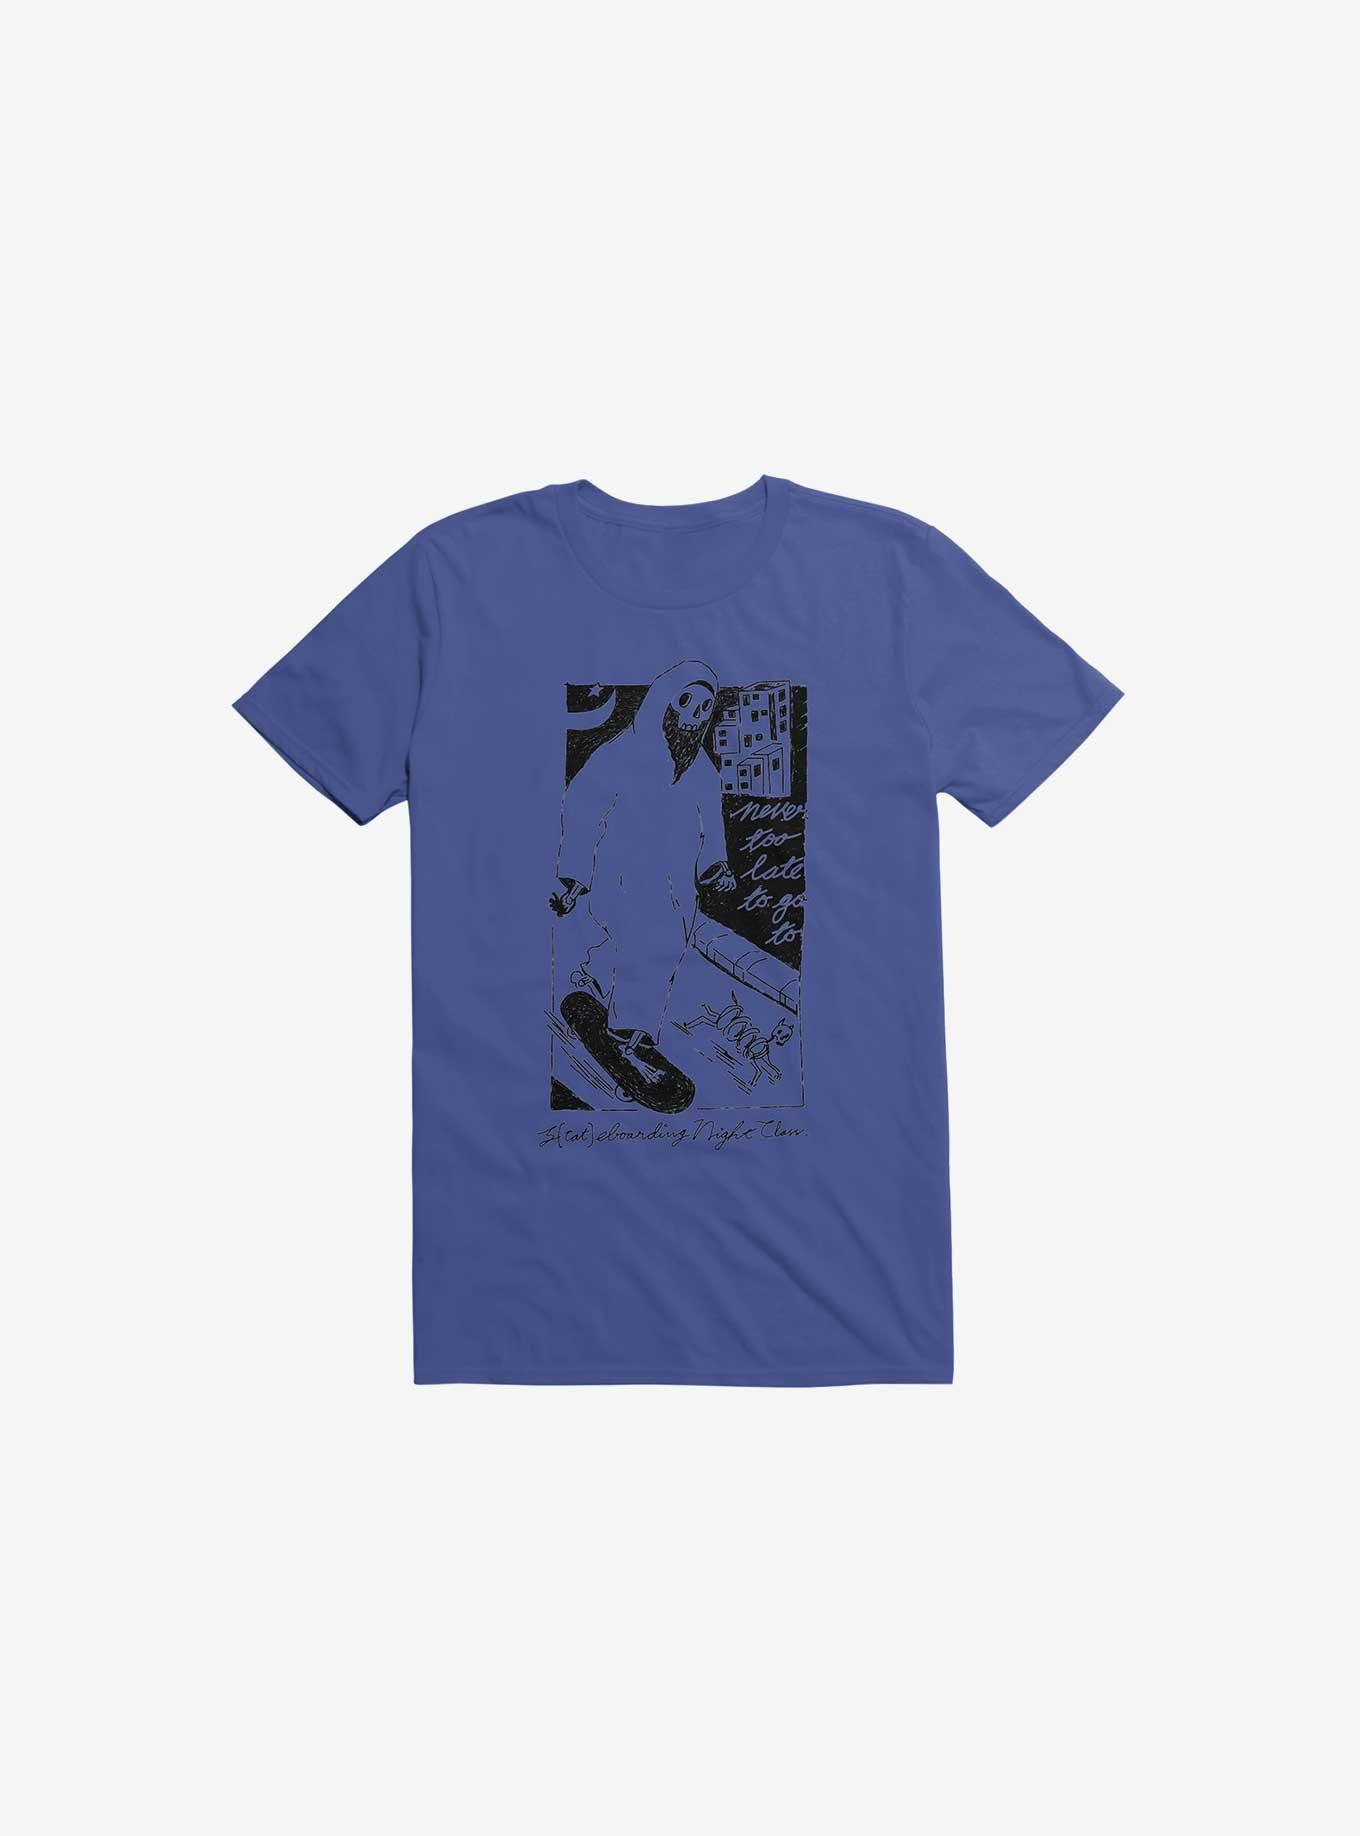 Nightclashh Skateboard Royal Blue T-Shirt